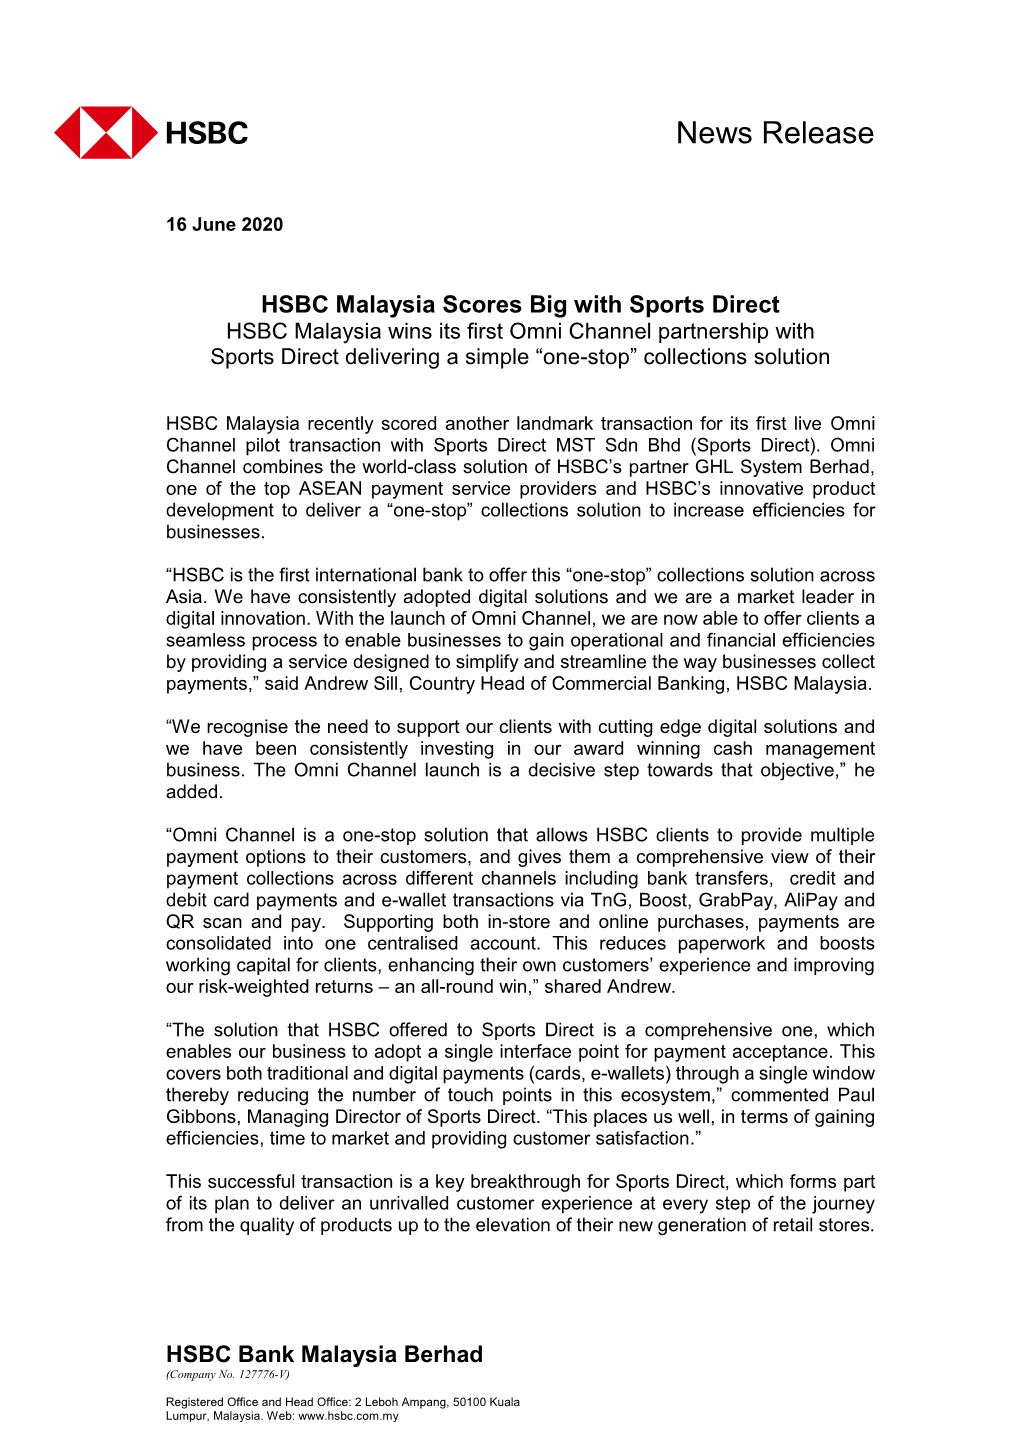 HSBC Malaysia Scores Big with Sports Direct